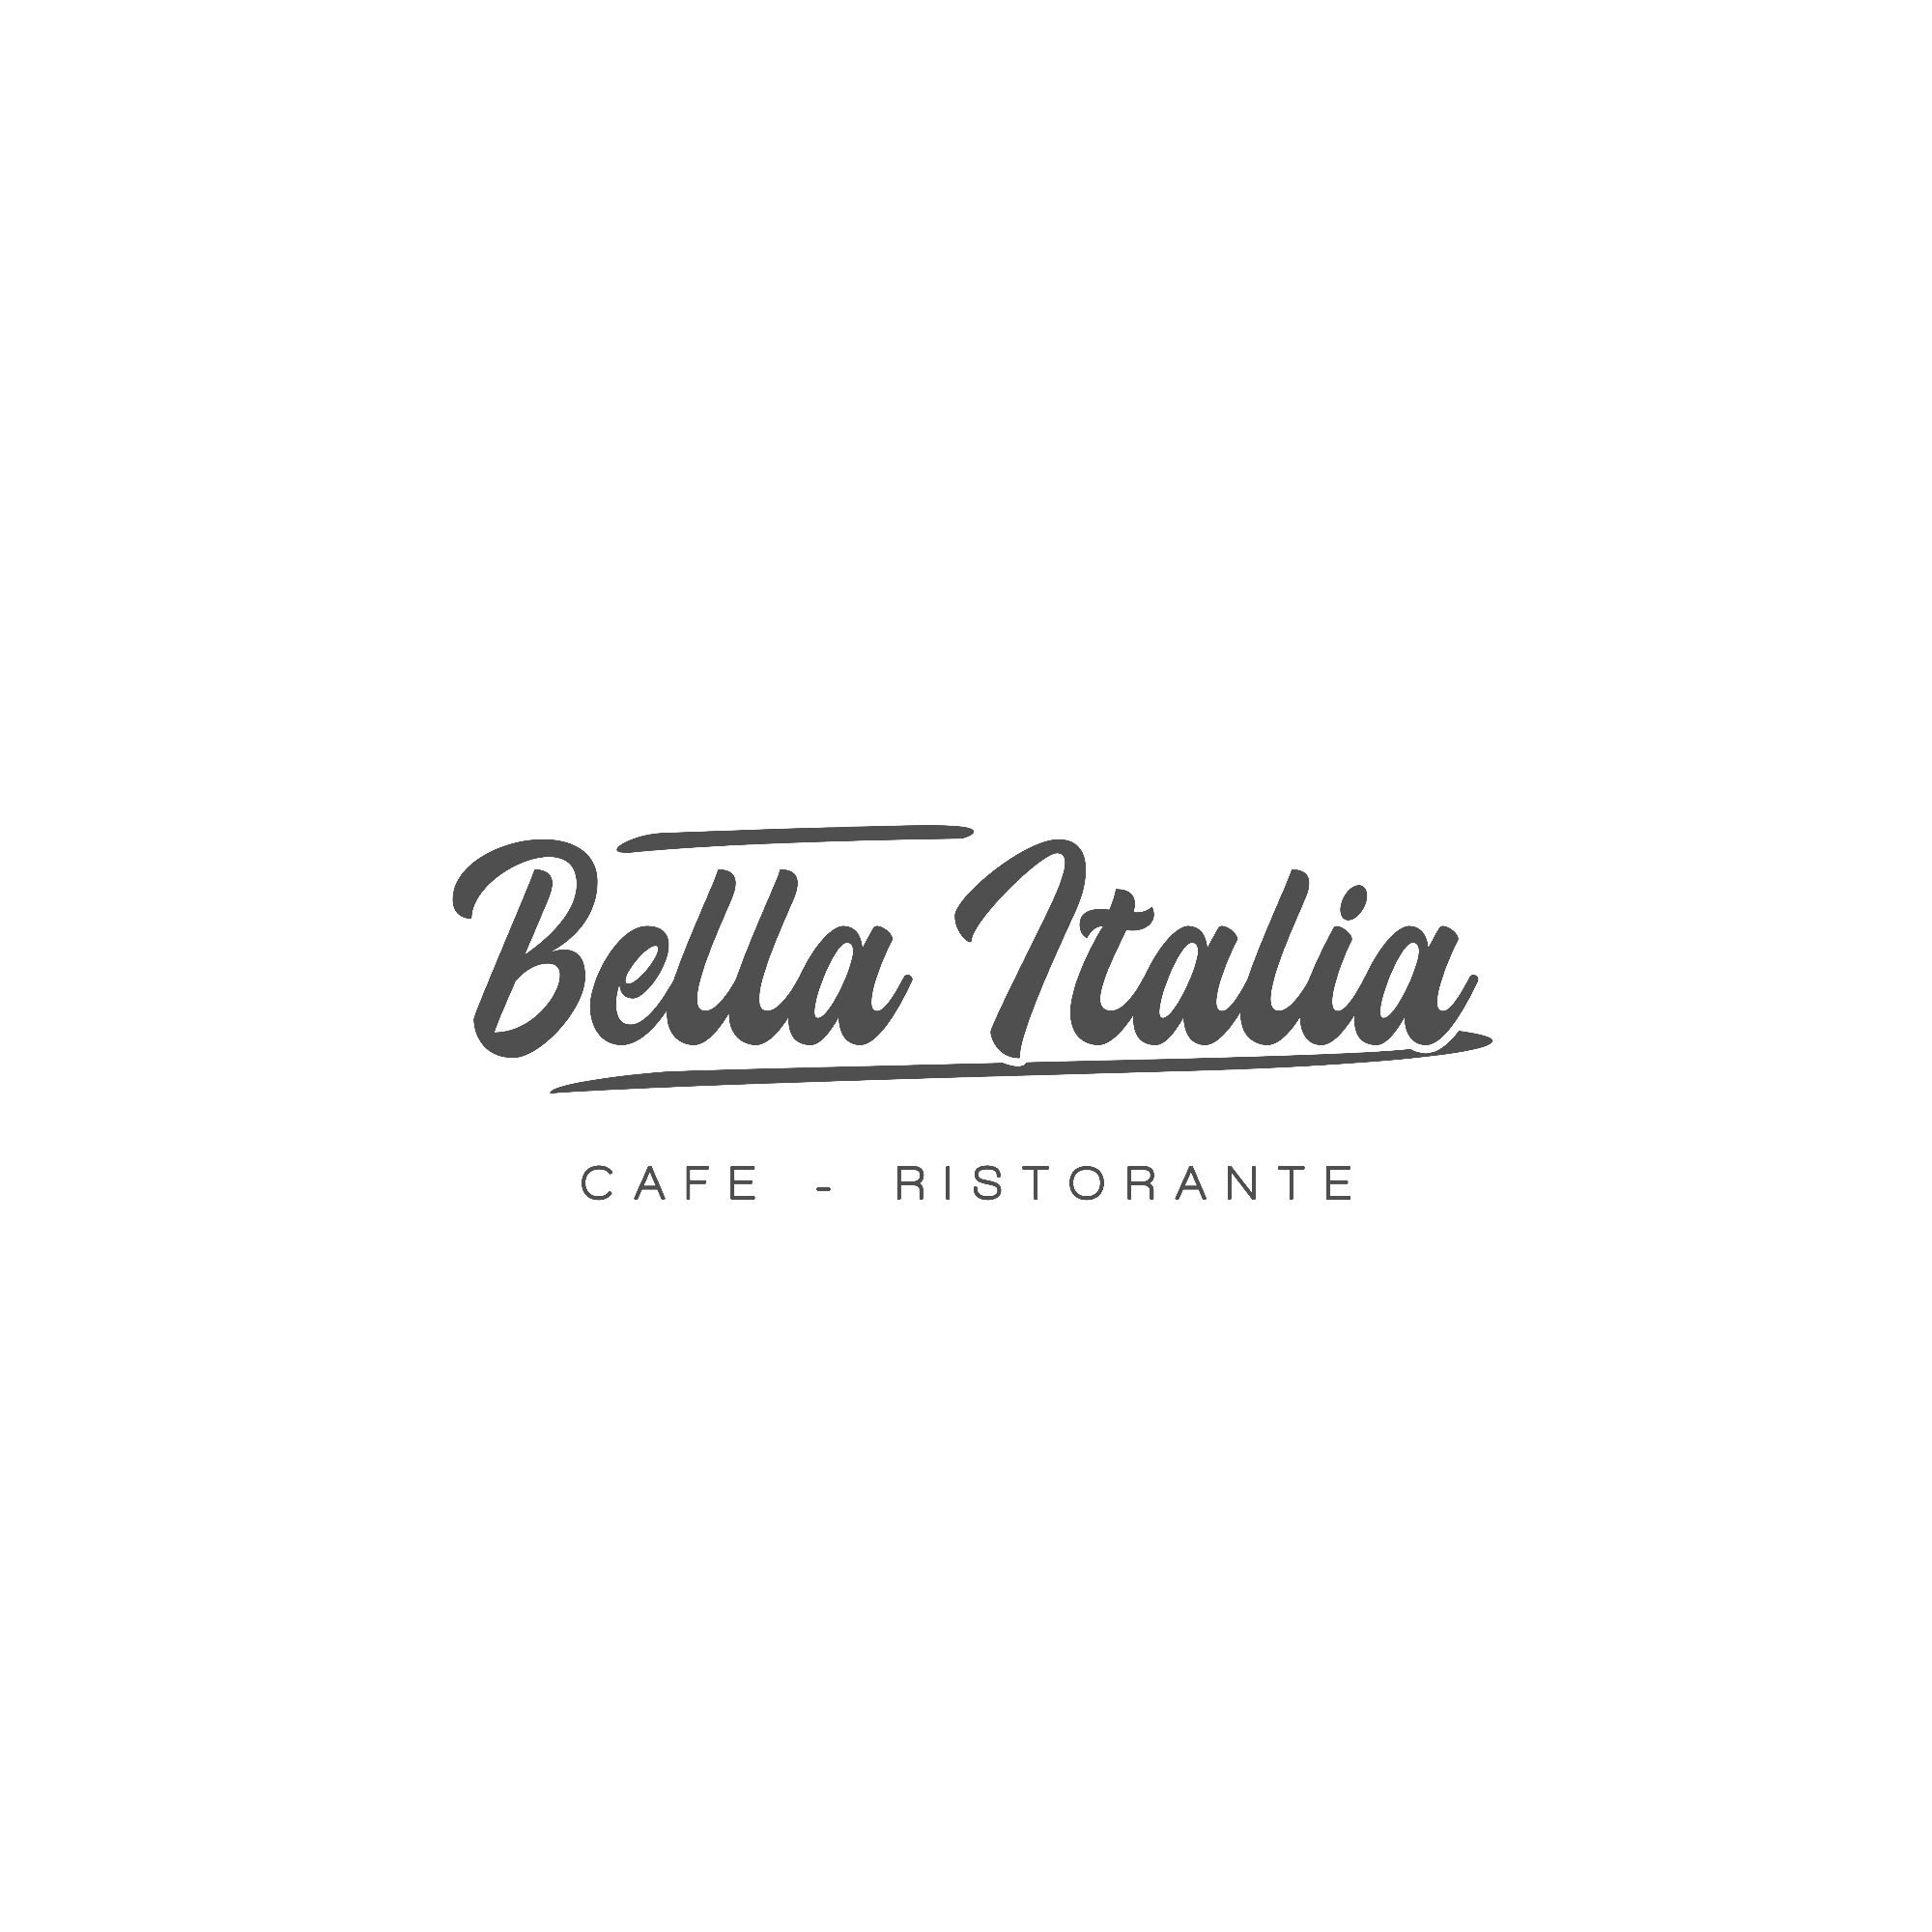 Bella Italia Logo